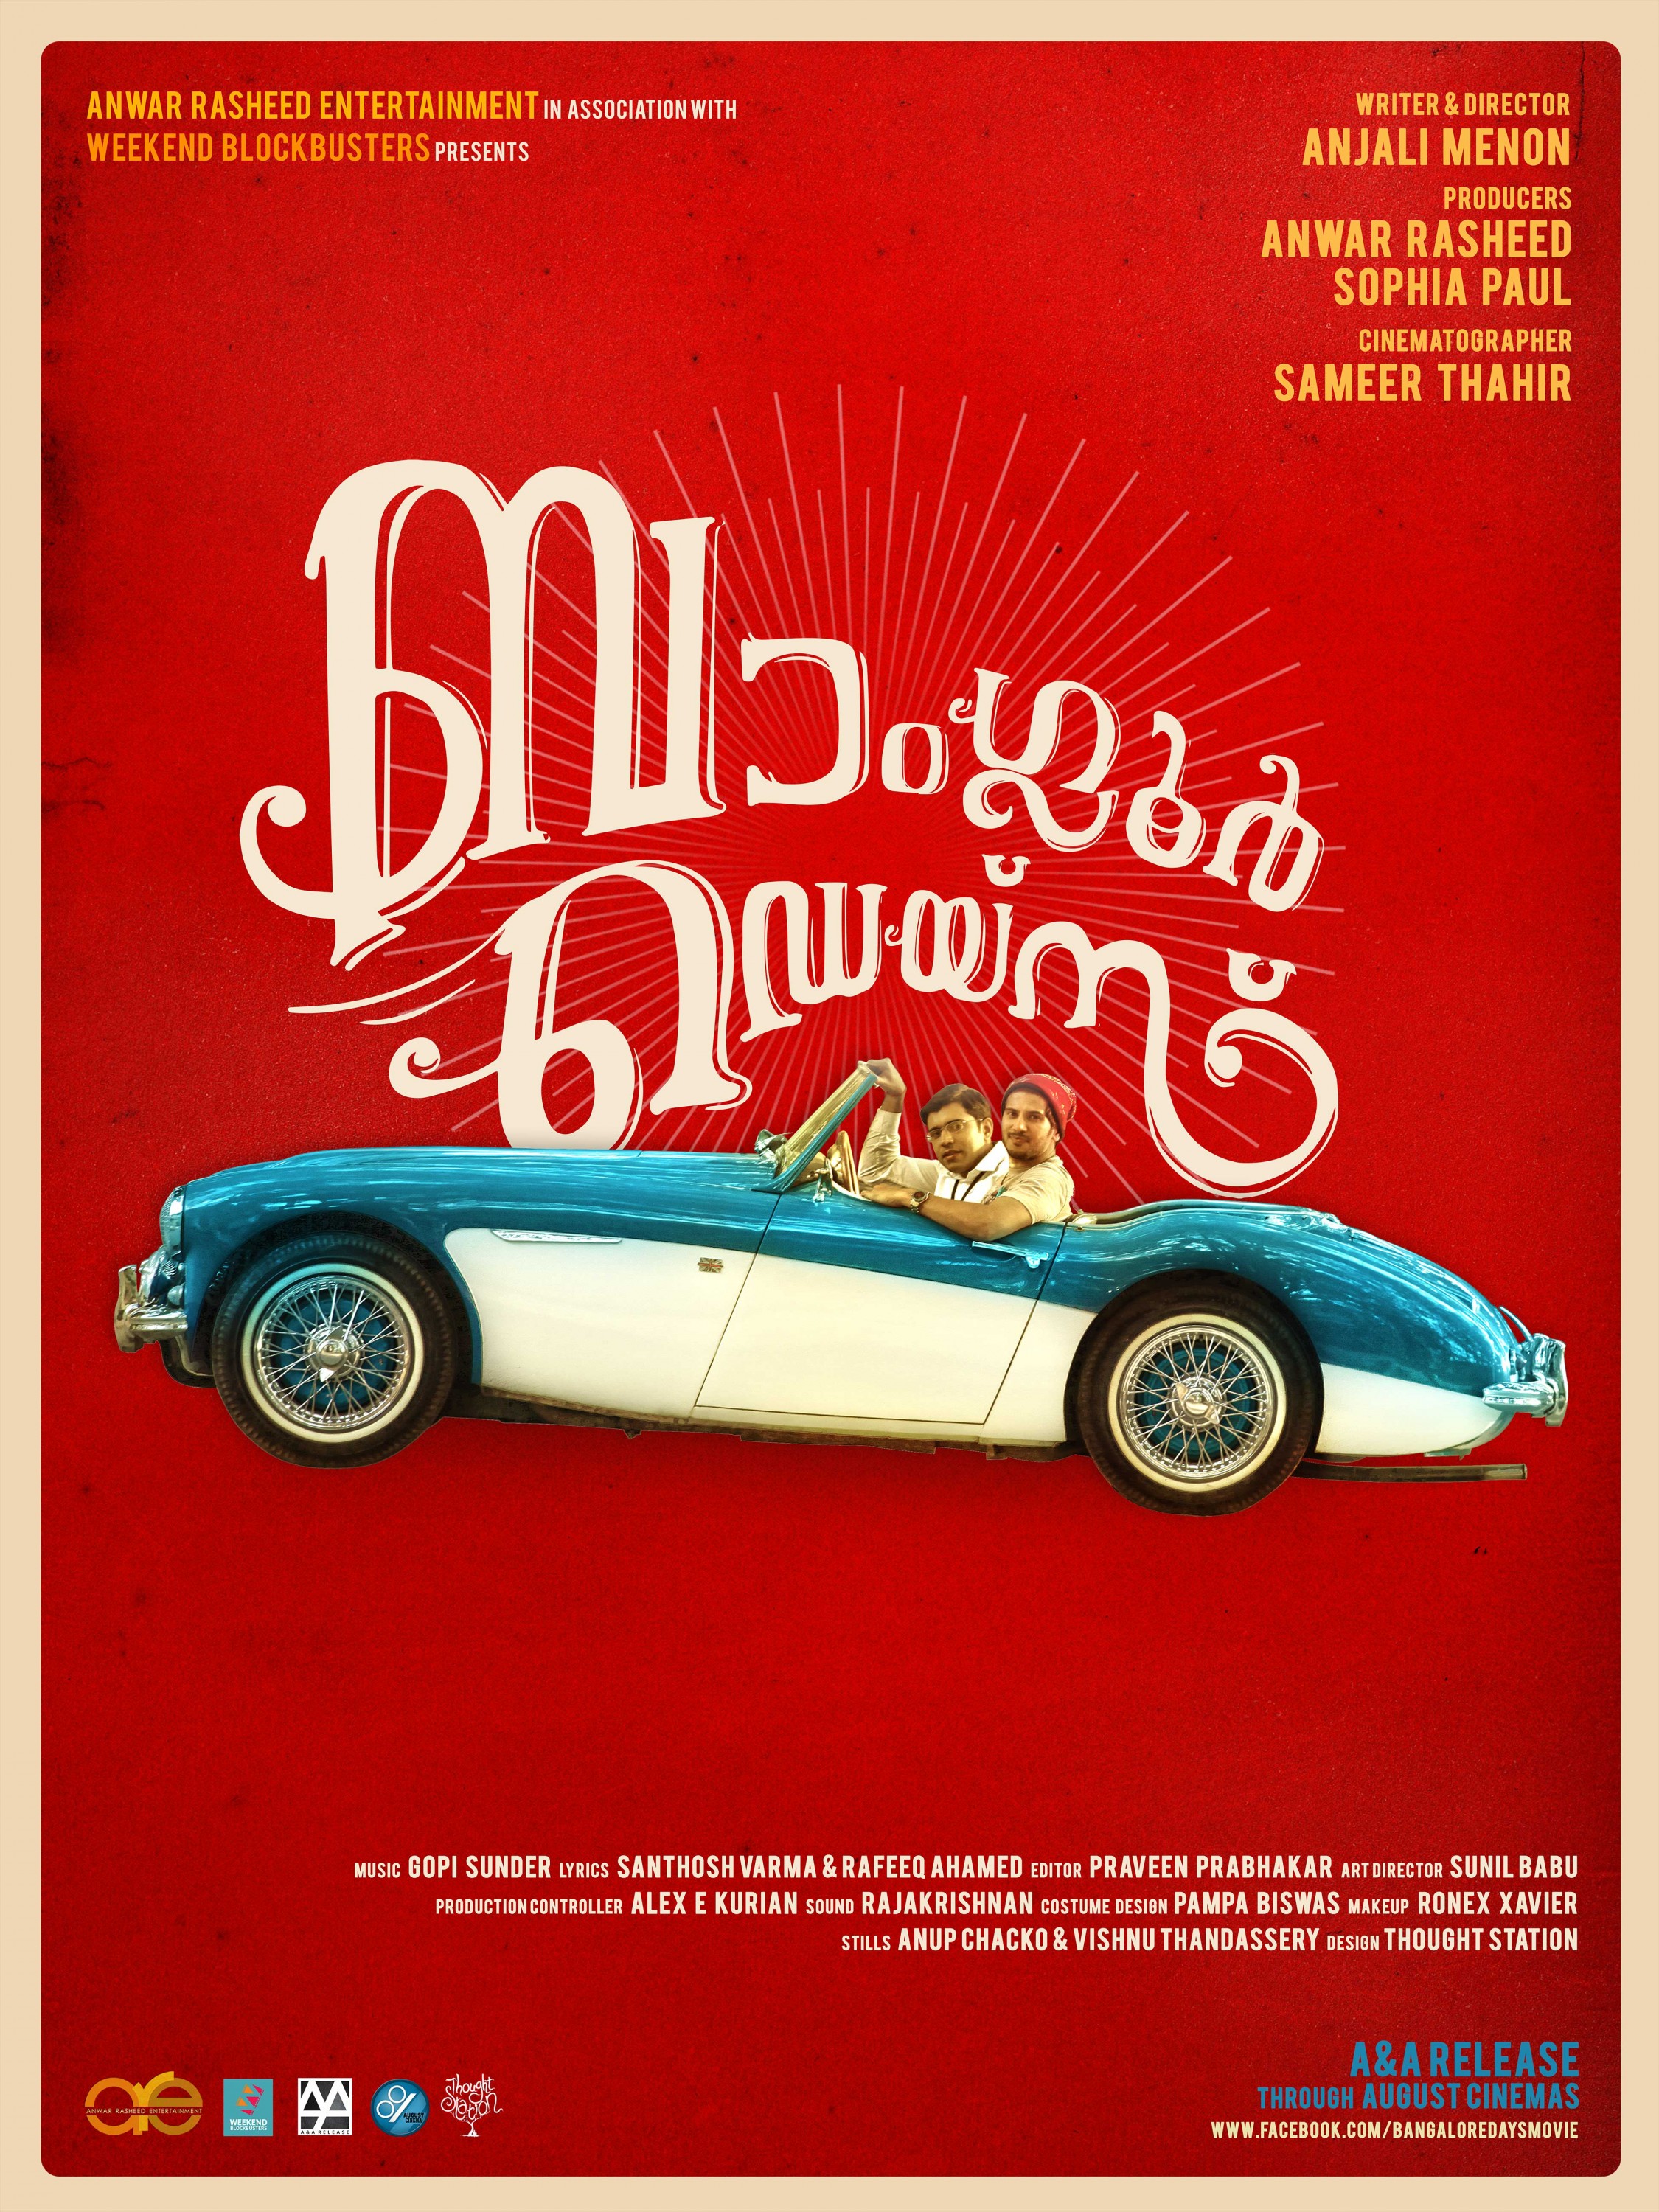 bangalore days movie with english subtitles free download utorrent